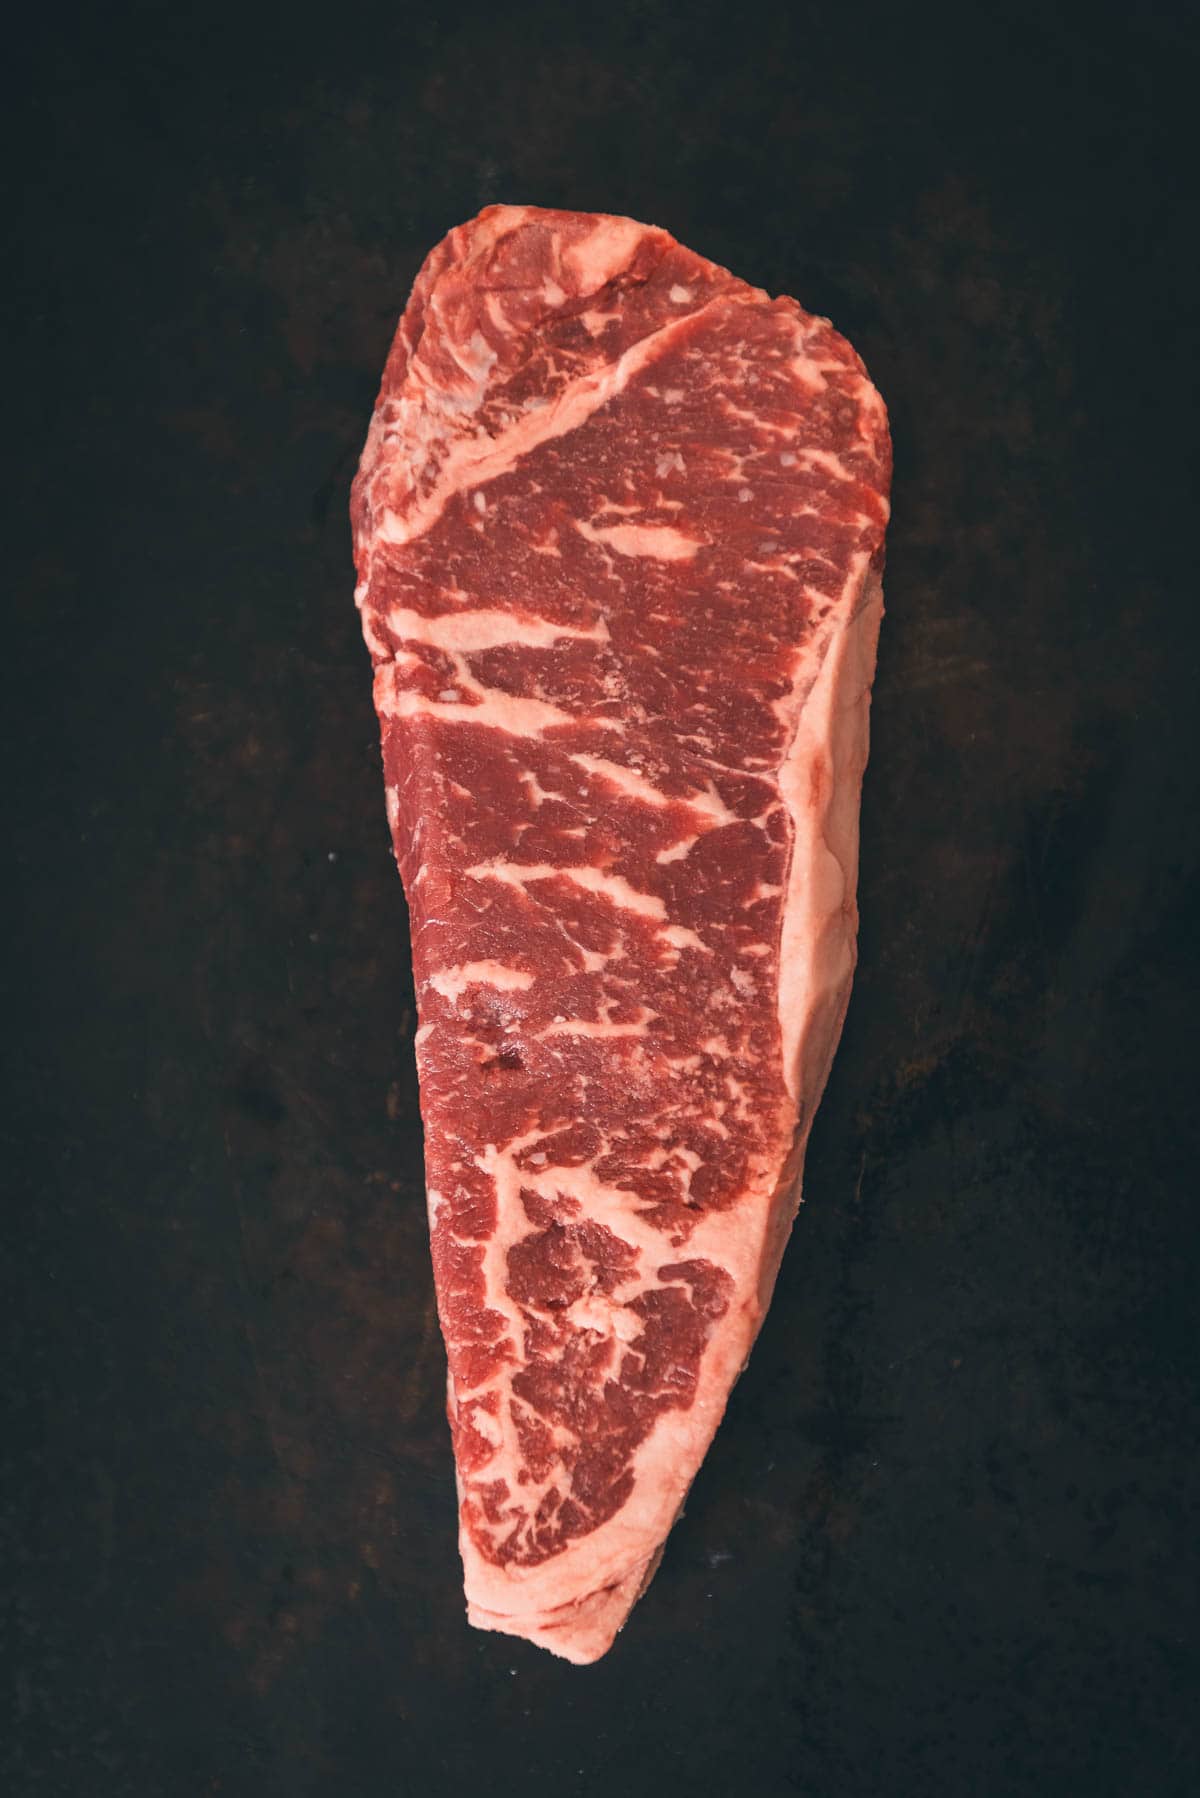 A choice cut of boneless New York Strip Steak.